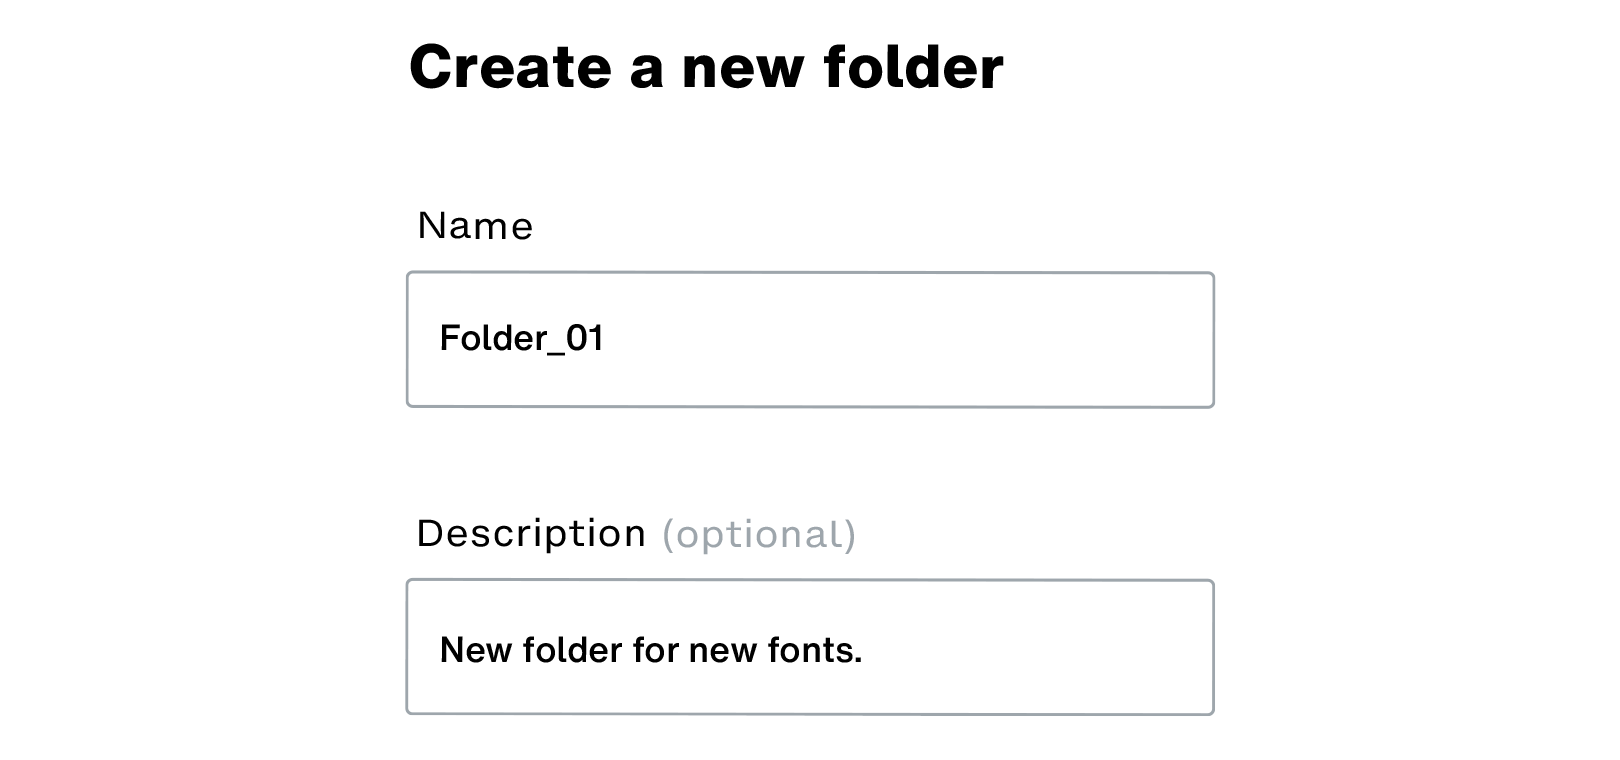 Create a new folder 01